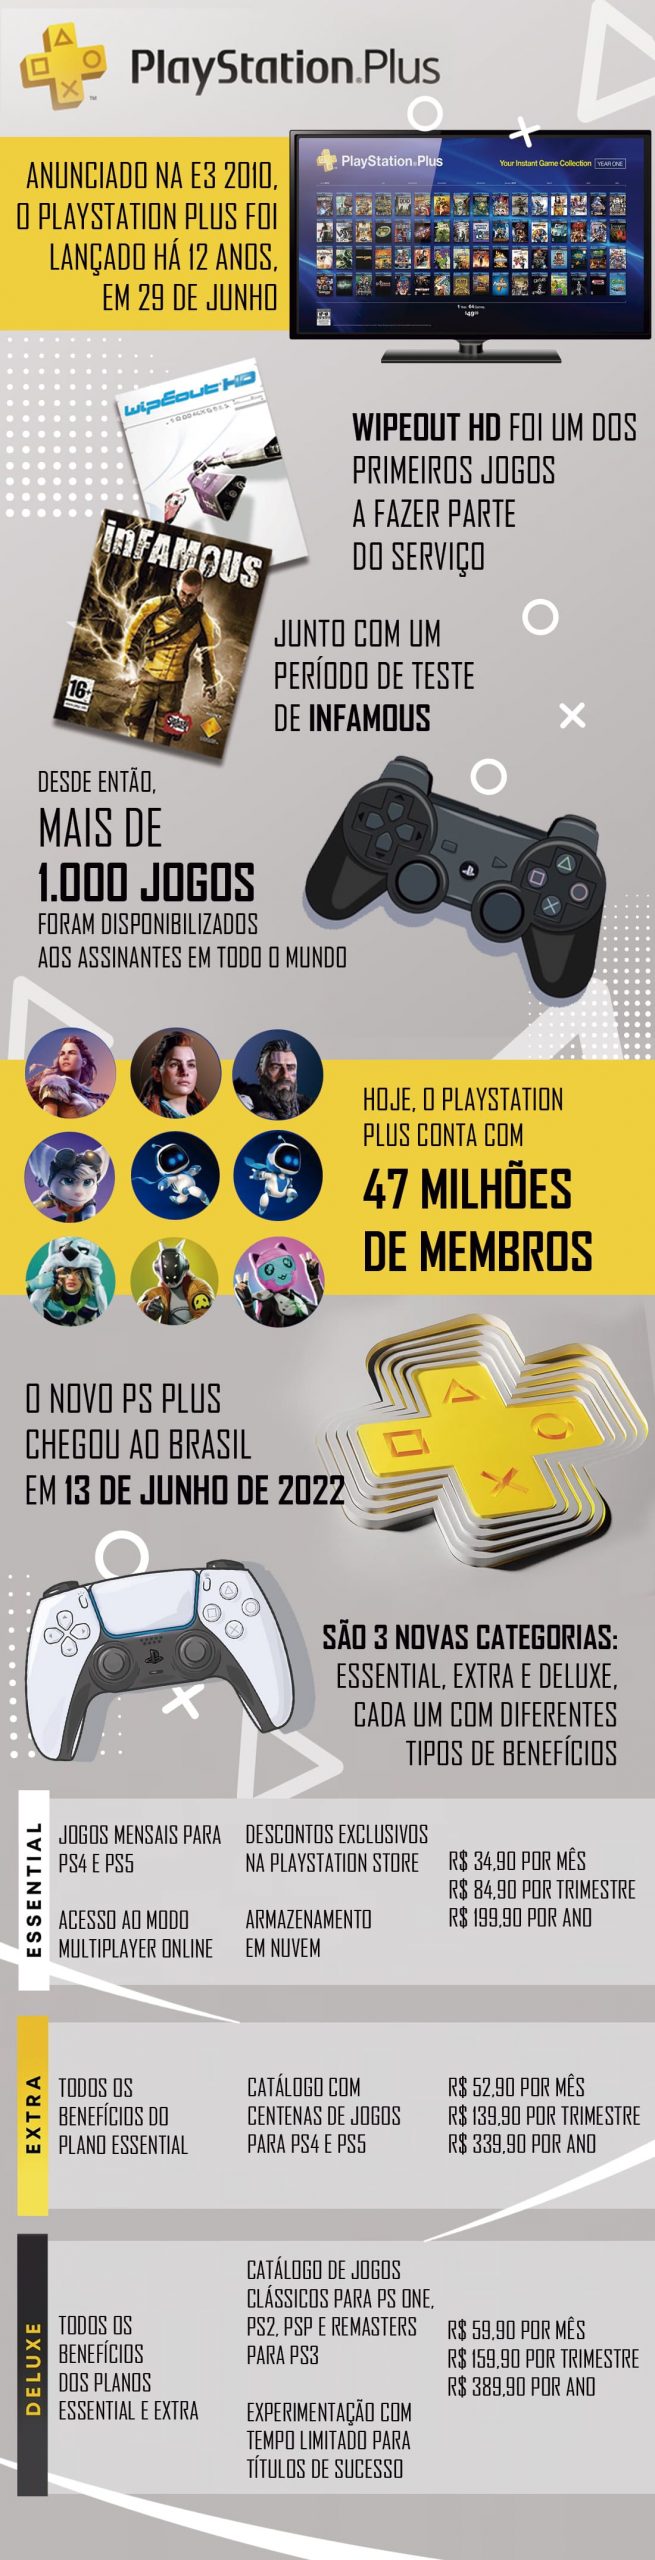 Guia Completo da PlayStation Plus - GameForces